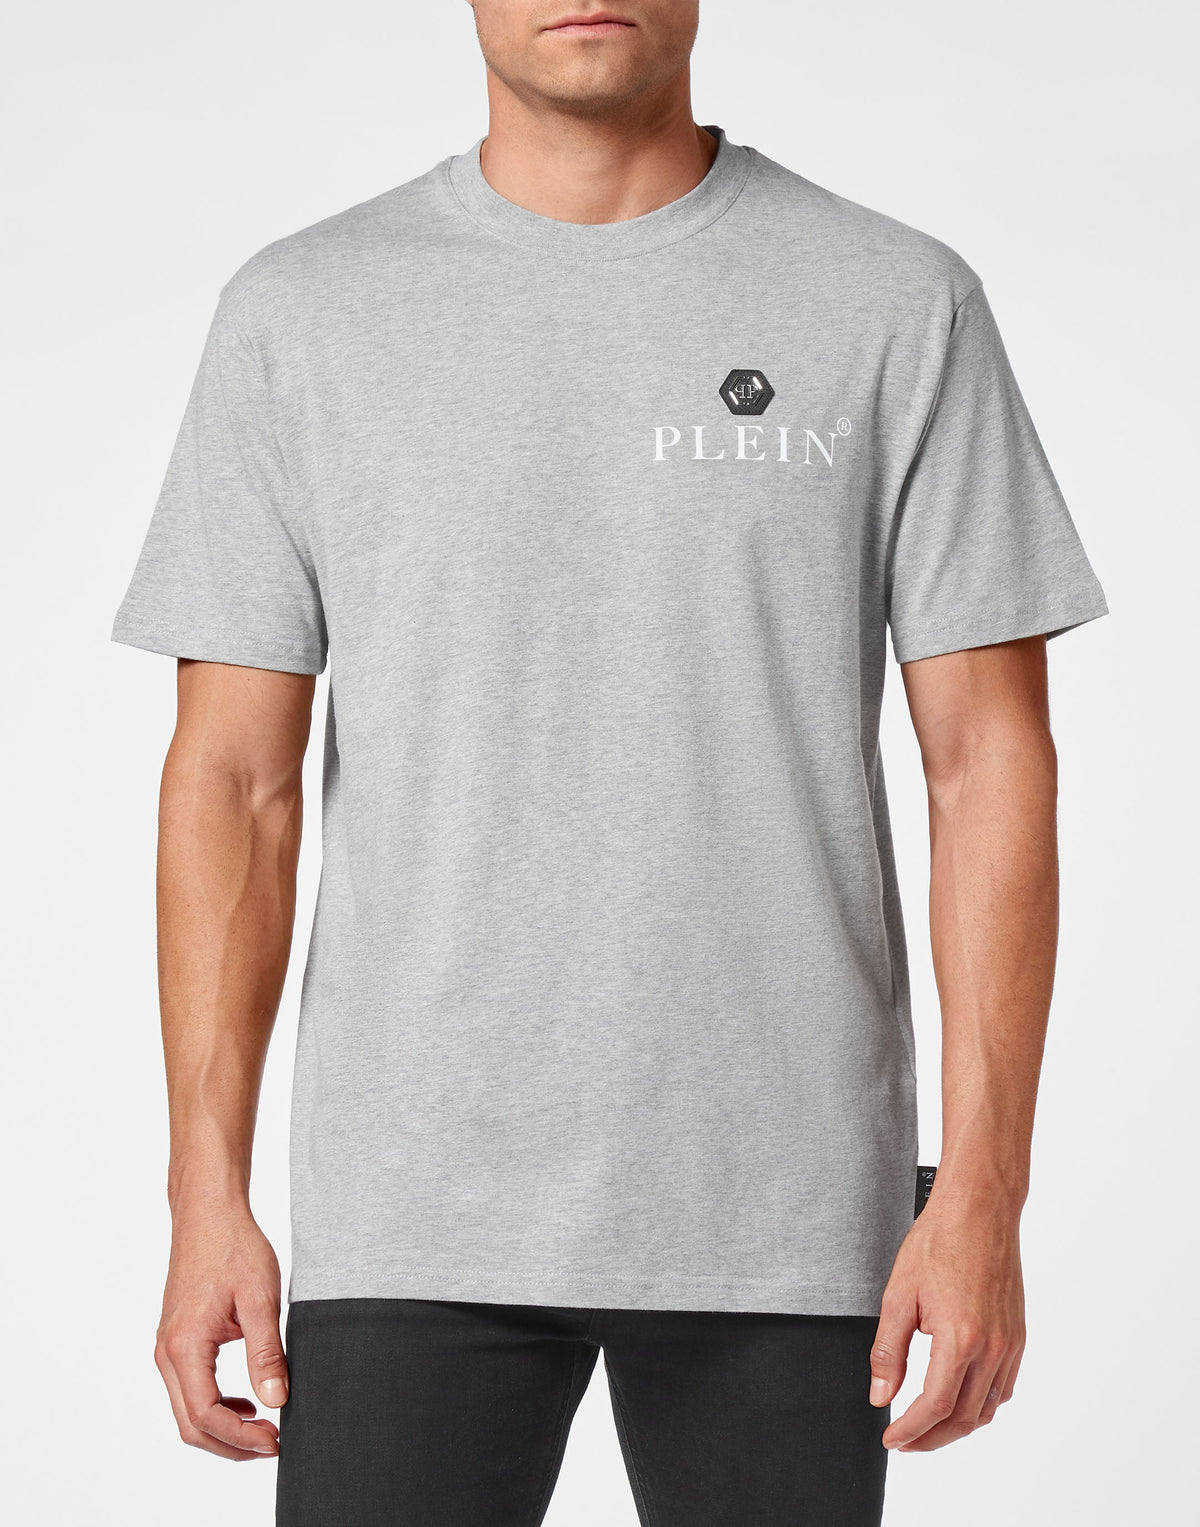 T-shirt Round Neck SS Hexagon grey